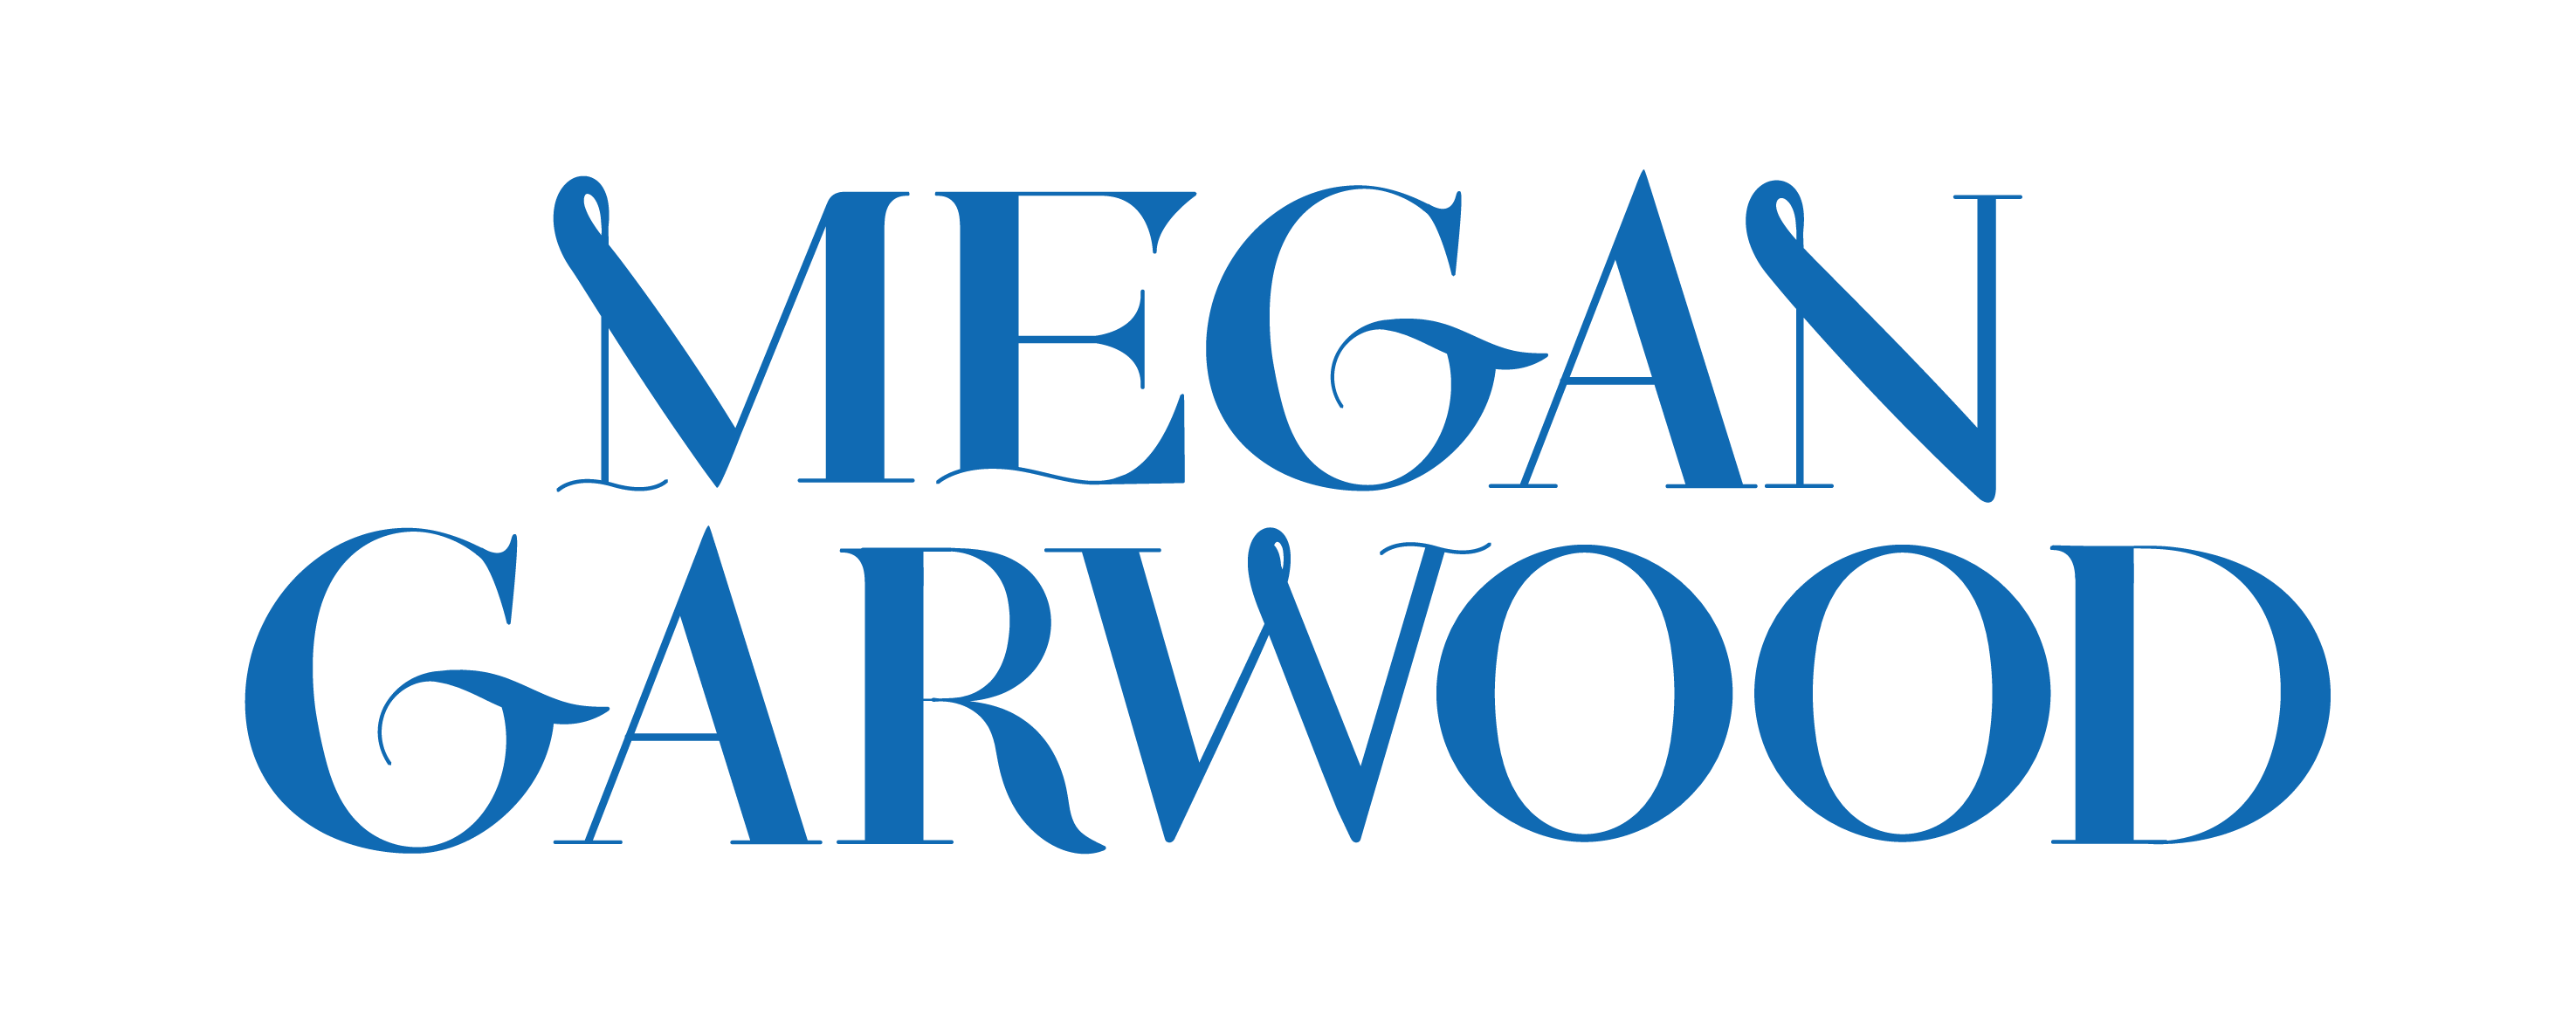 Text-based logo reading Megan Garwood in a whimsical serif font